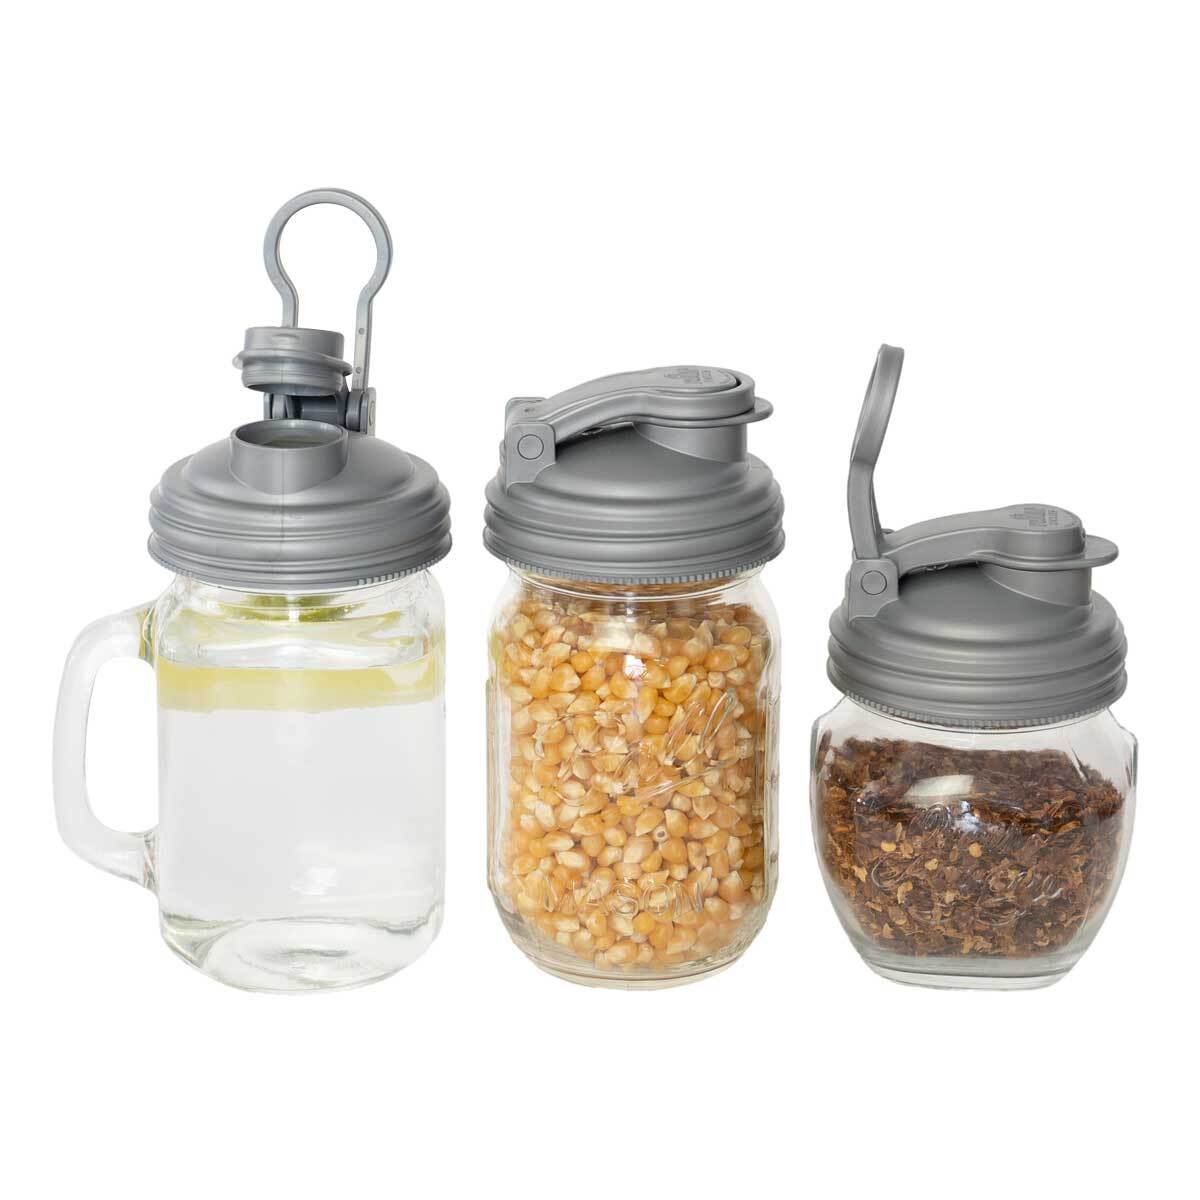 10 Jar Spice Rack with 4 oz Mini Mason Jars - Choose Stain Color